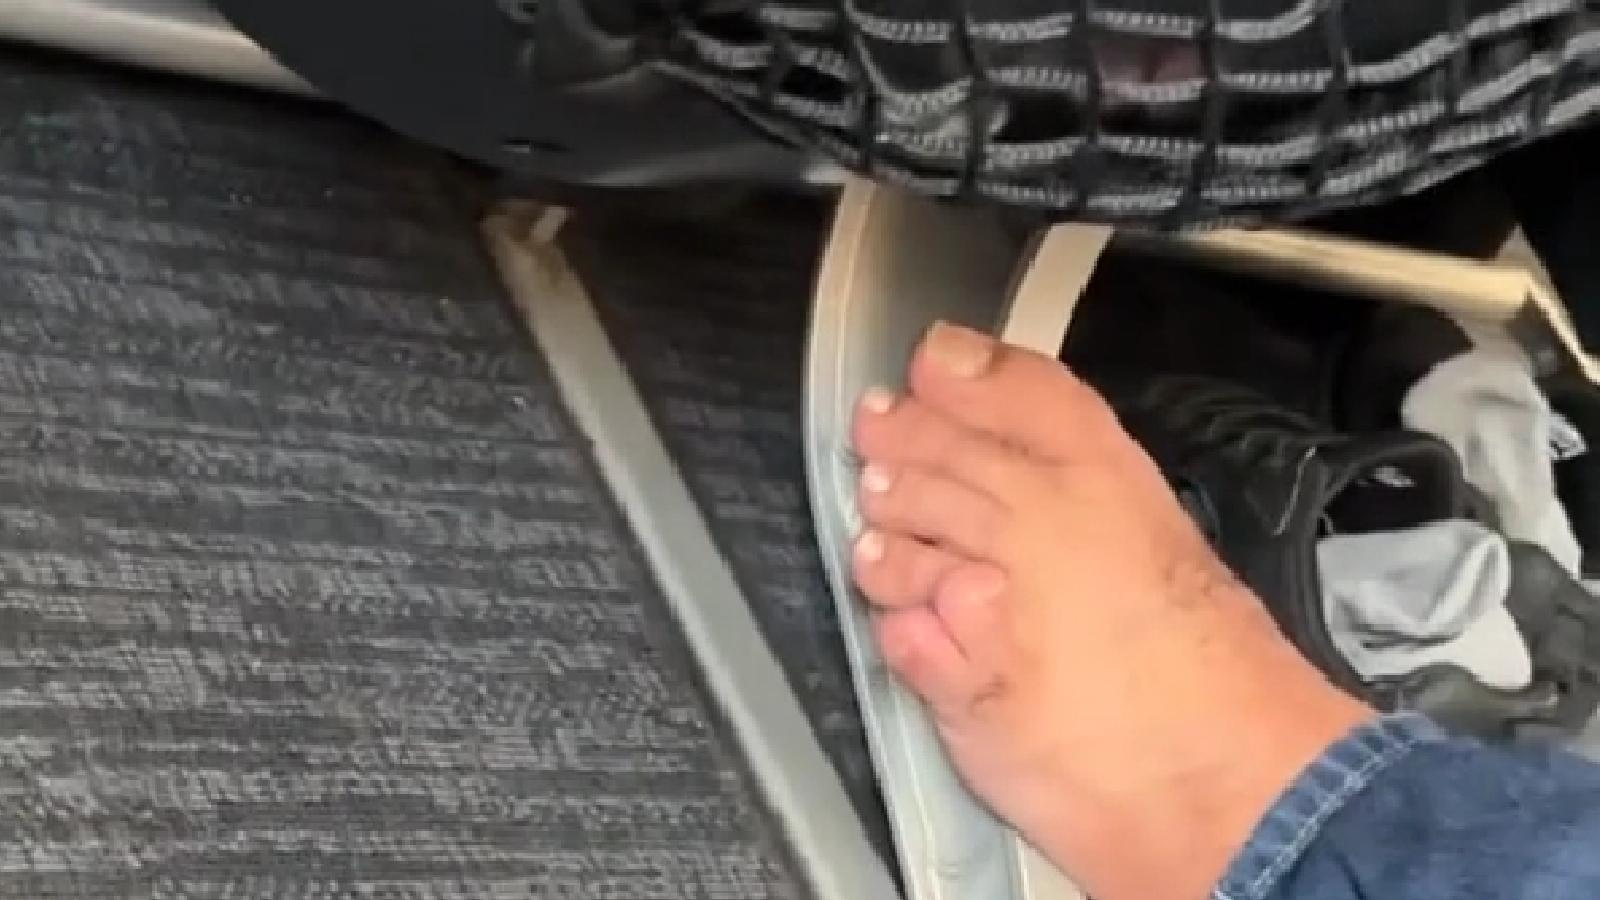 Passenger goes viral for barefoot sixth toe on flight - Dexerto